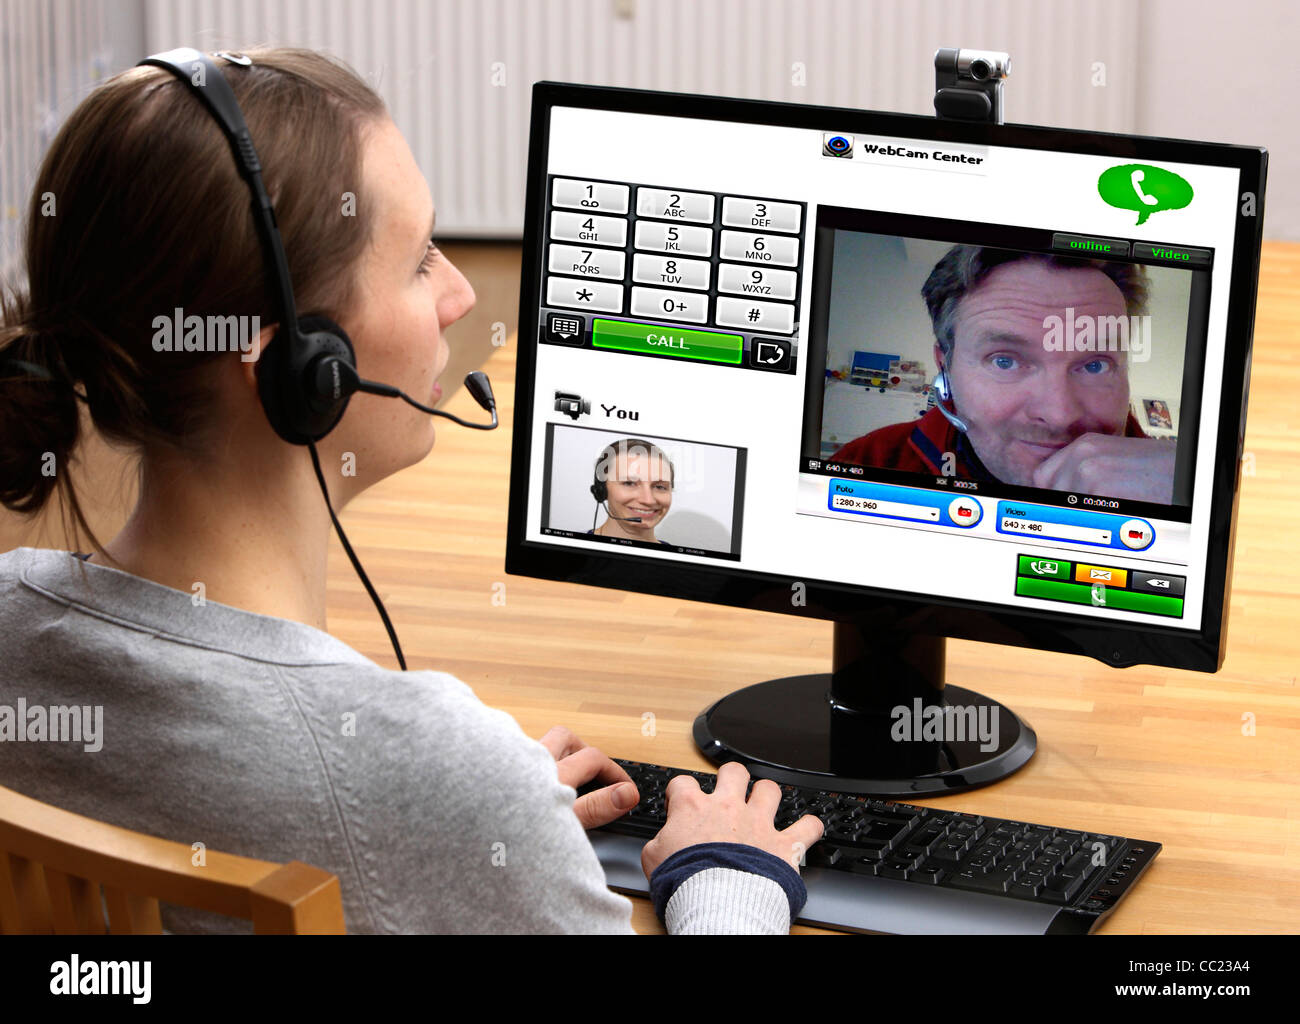 Webcam chat online